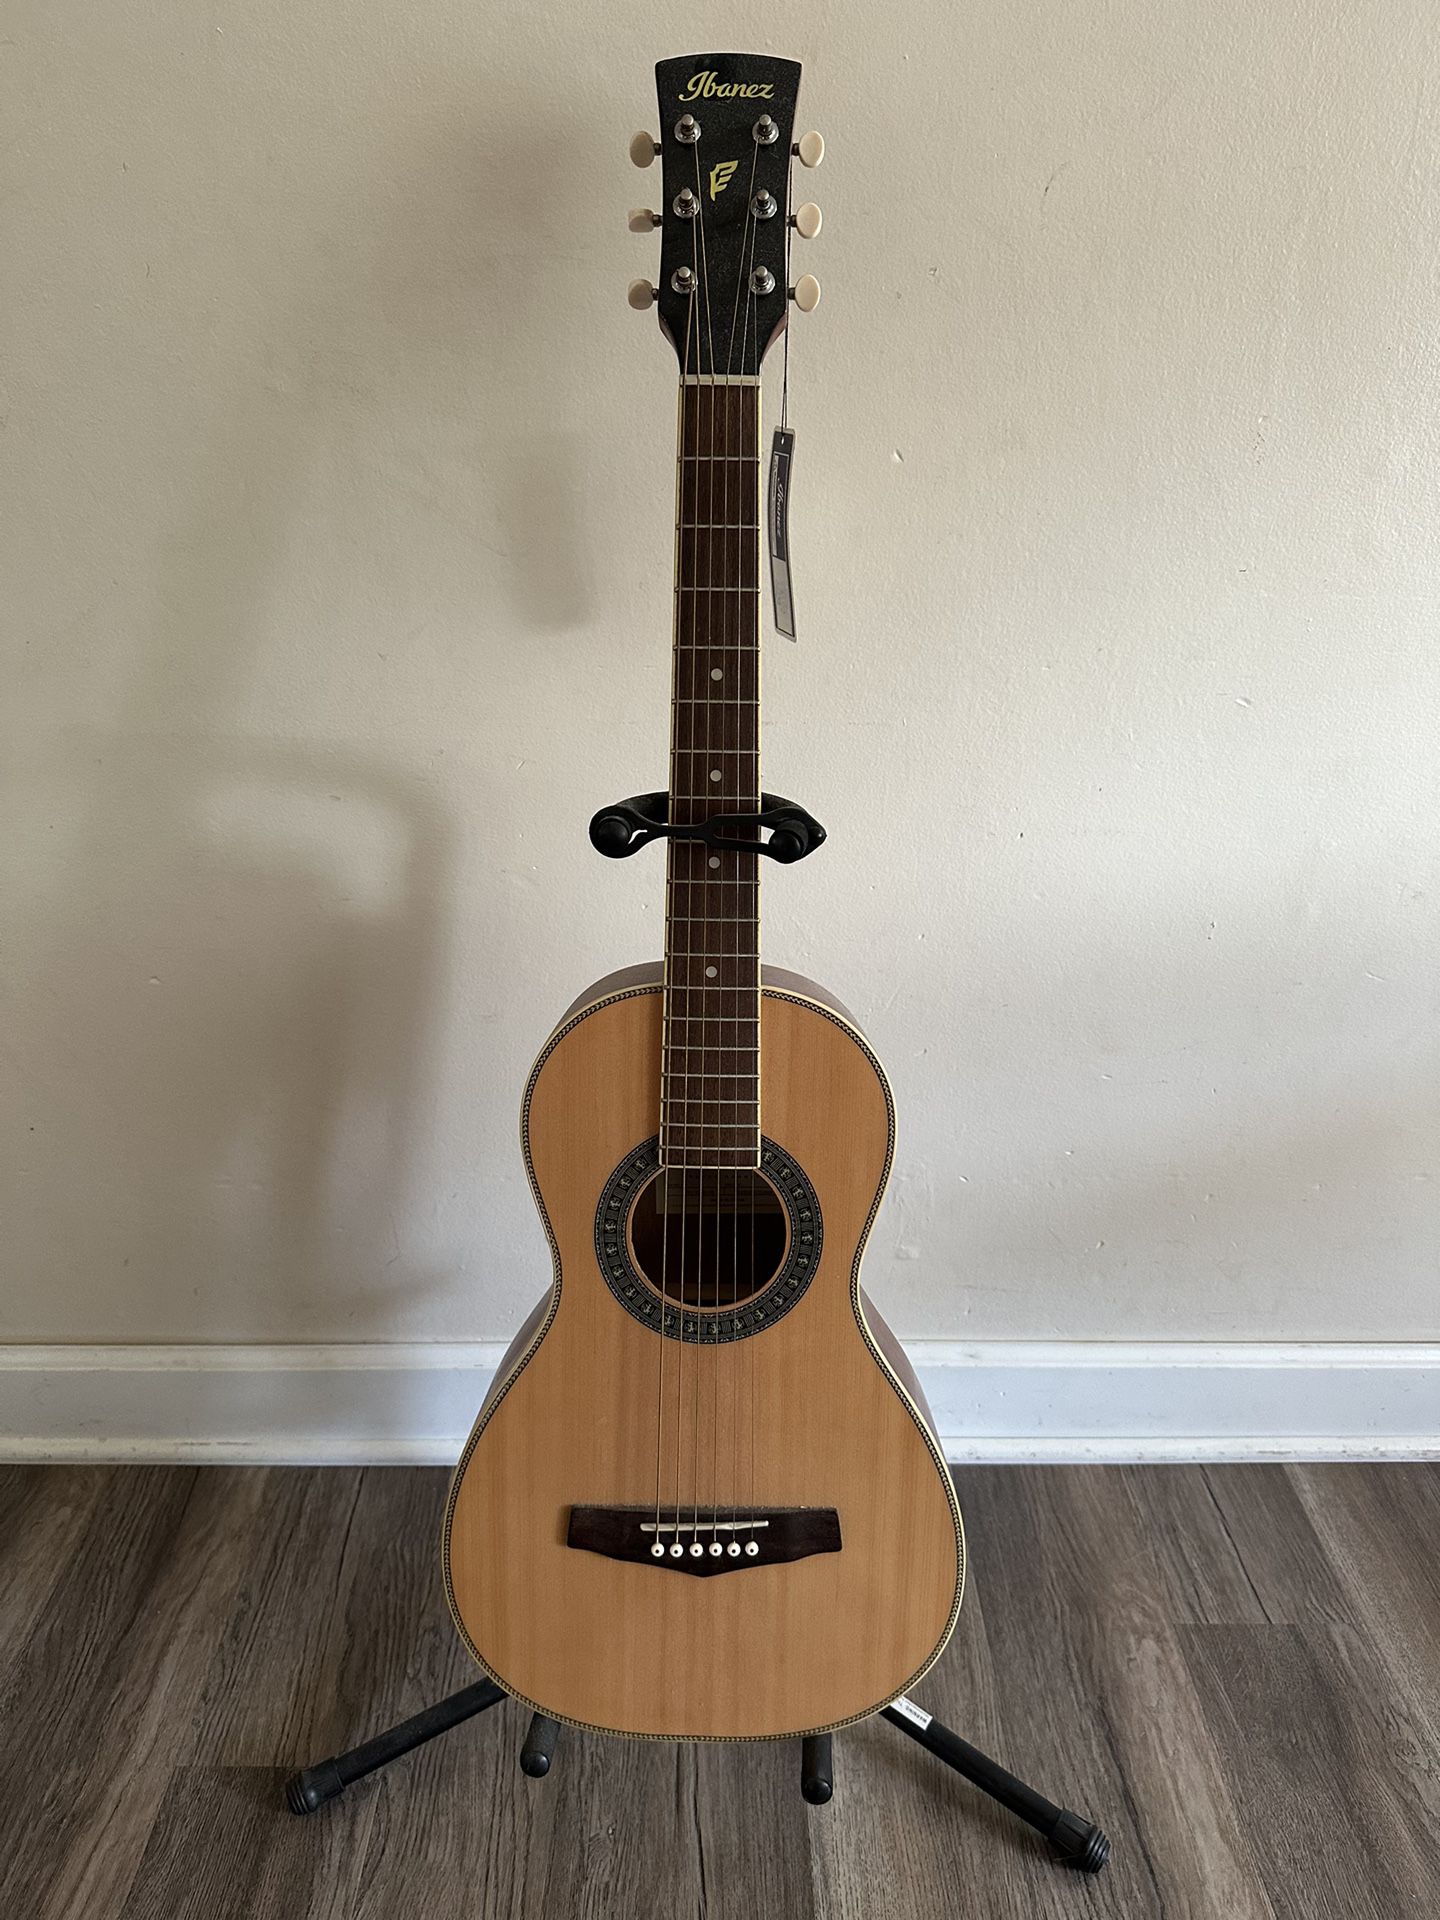 Ibanez PN-1 Acoustic Guitar